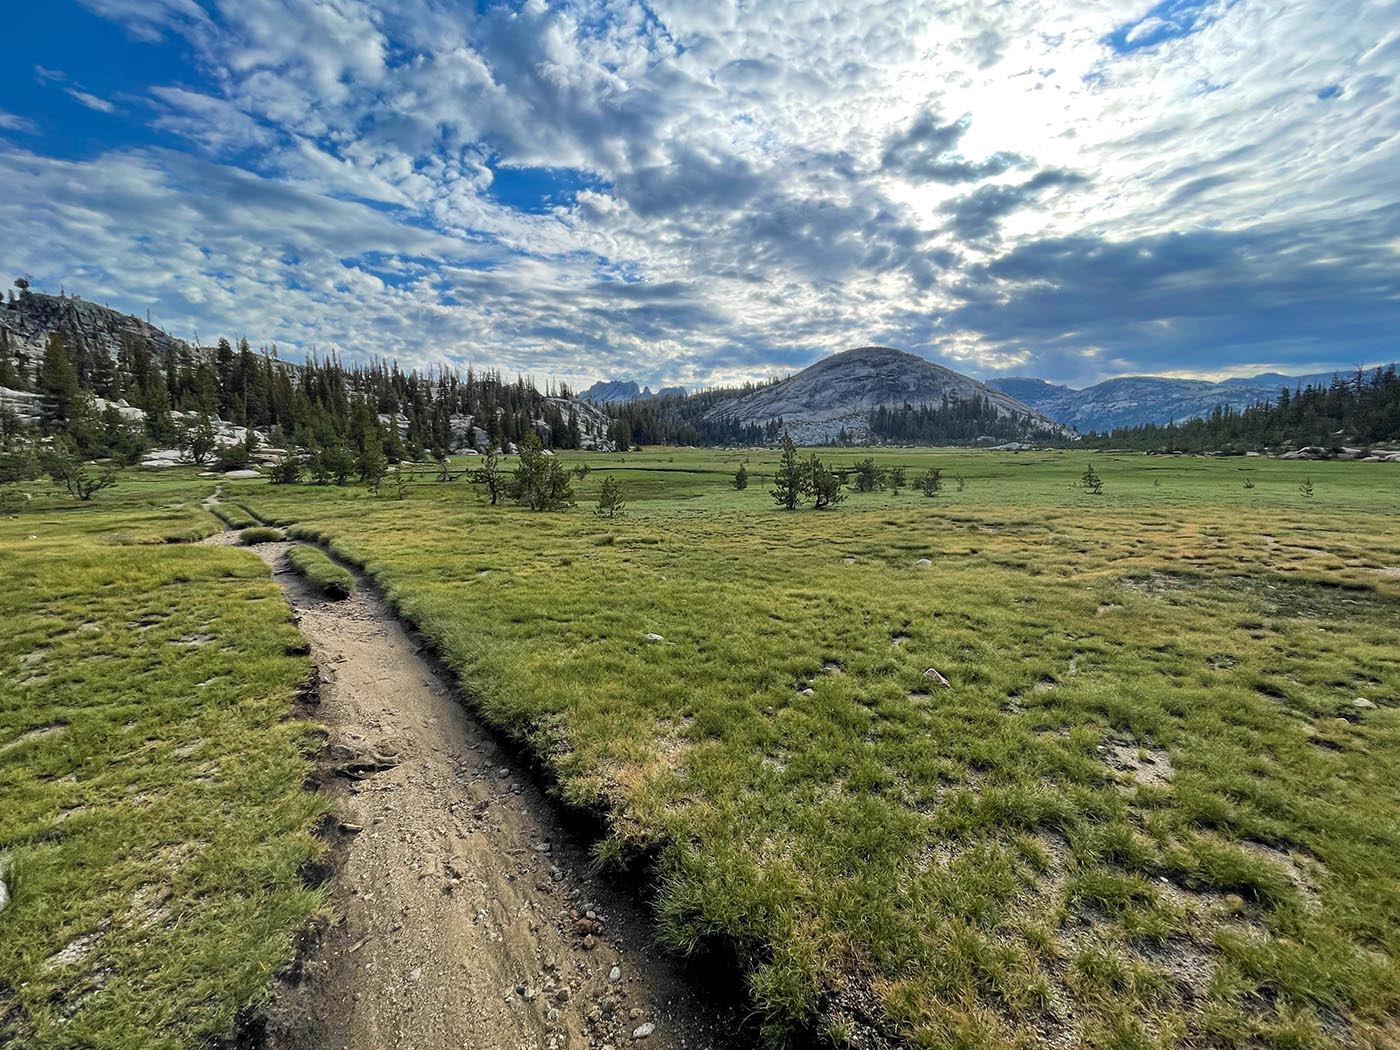 A trail cutting through an alpine meadow in Yosemite national park